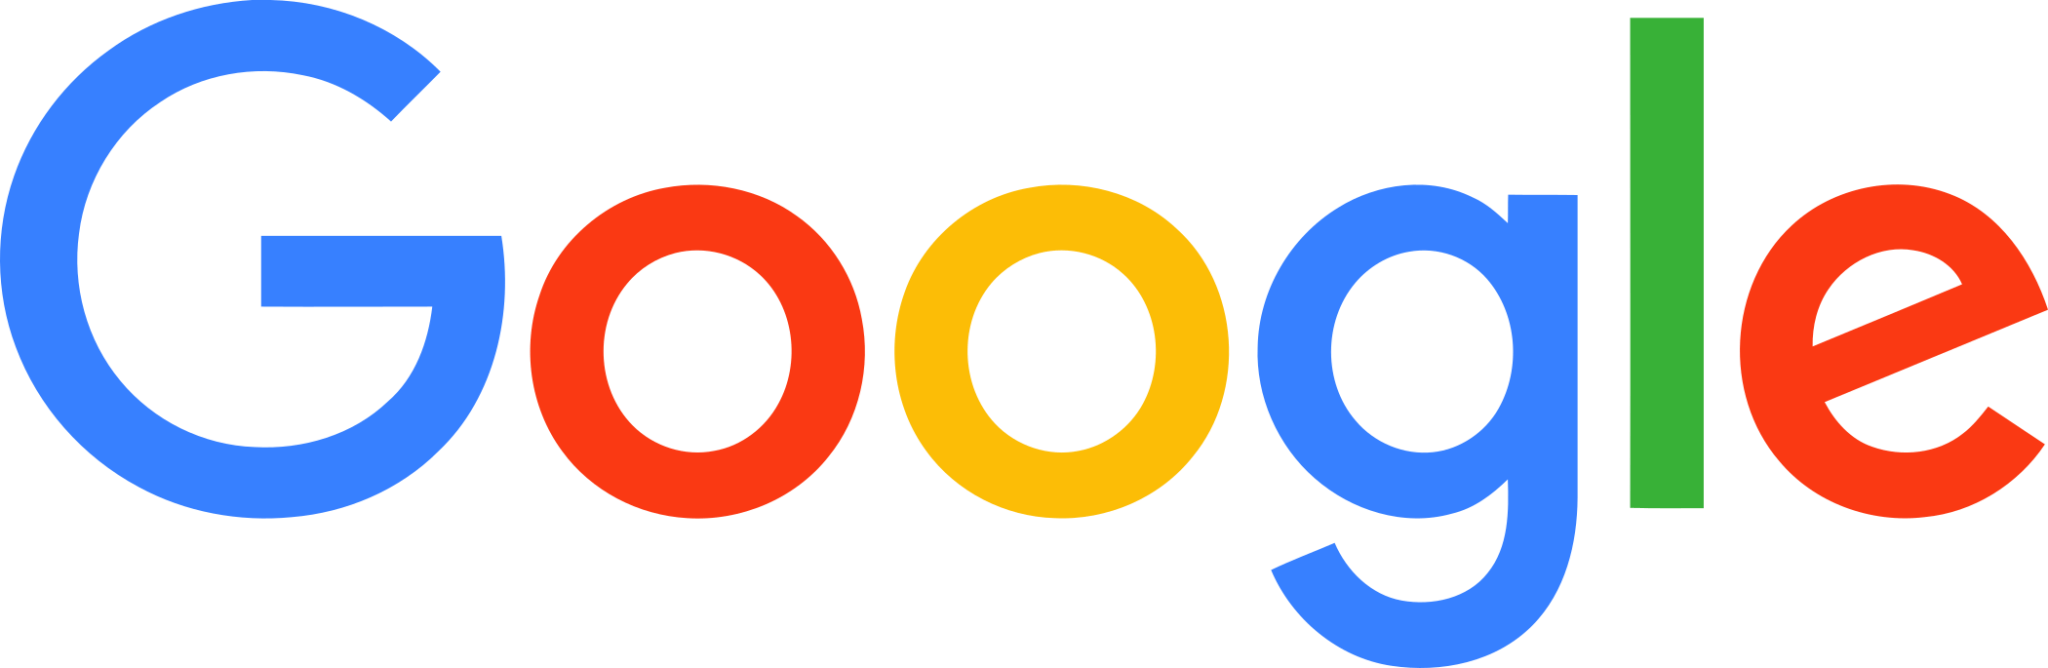 Google-Logo-Gallery-8-2048x668